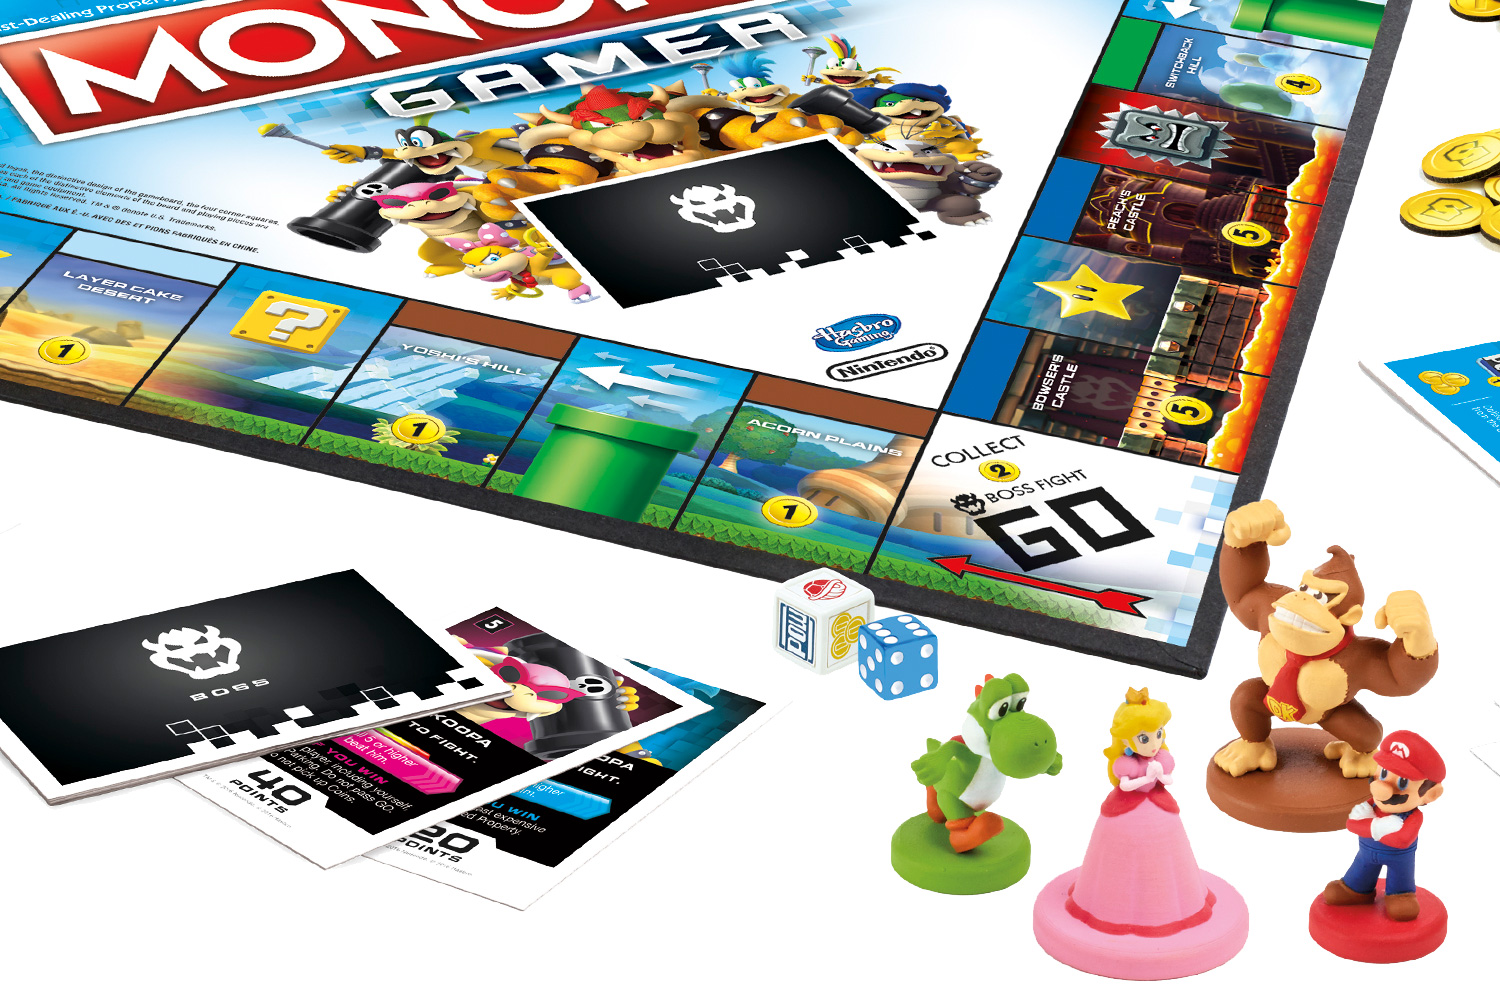 Monopoly - Nintendo Switch Standard Edition